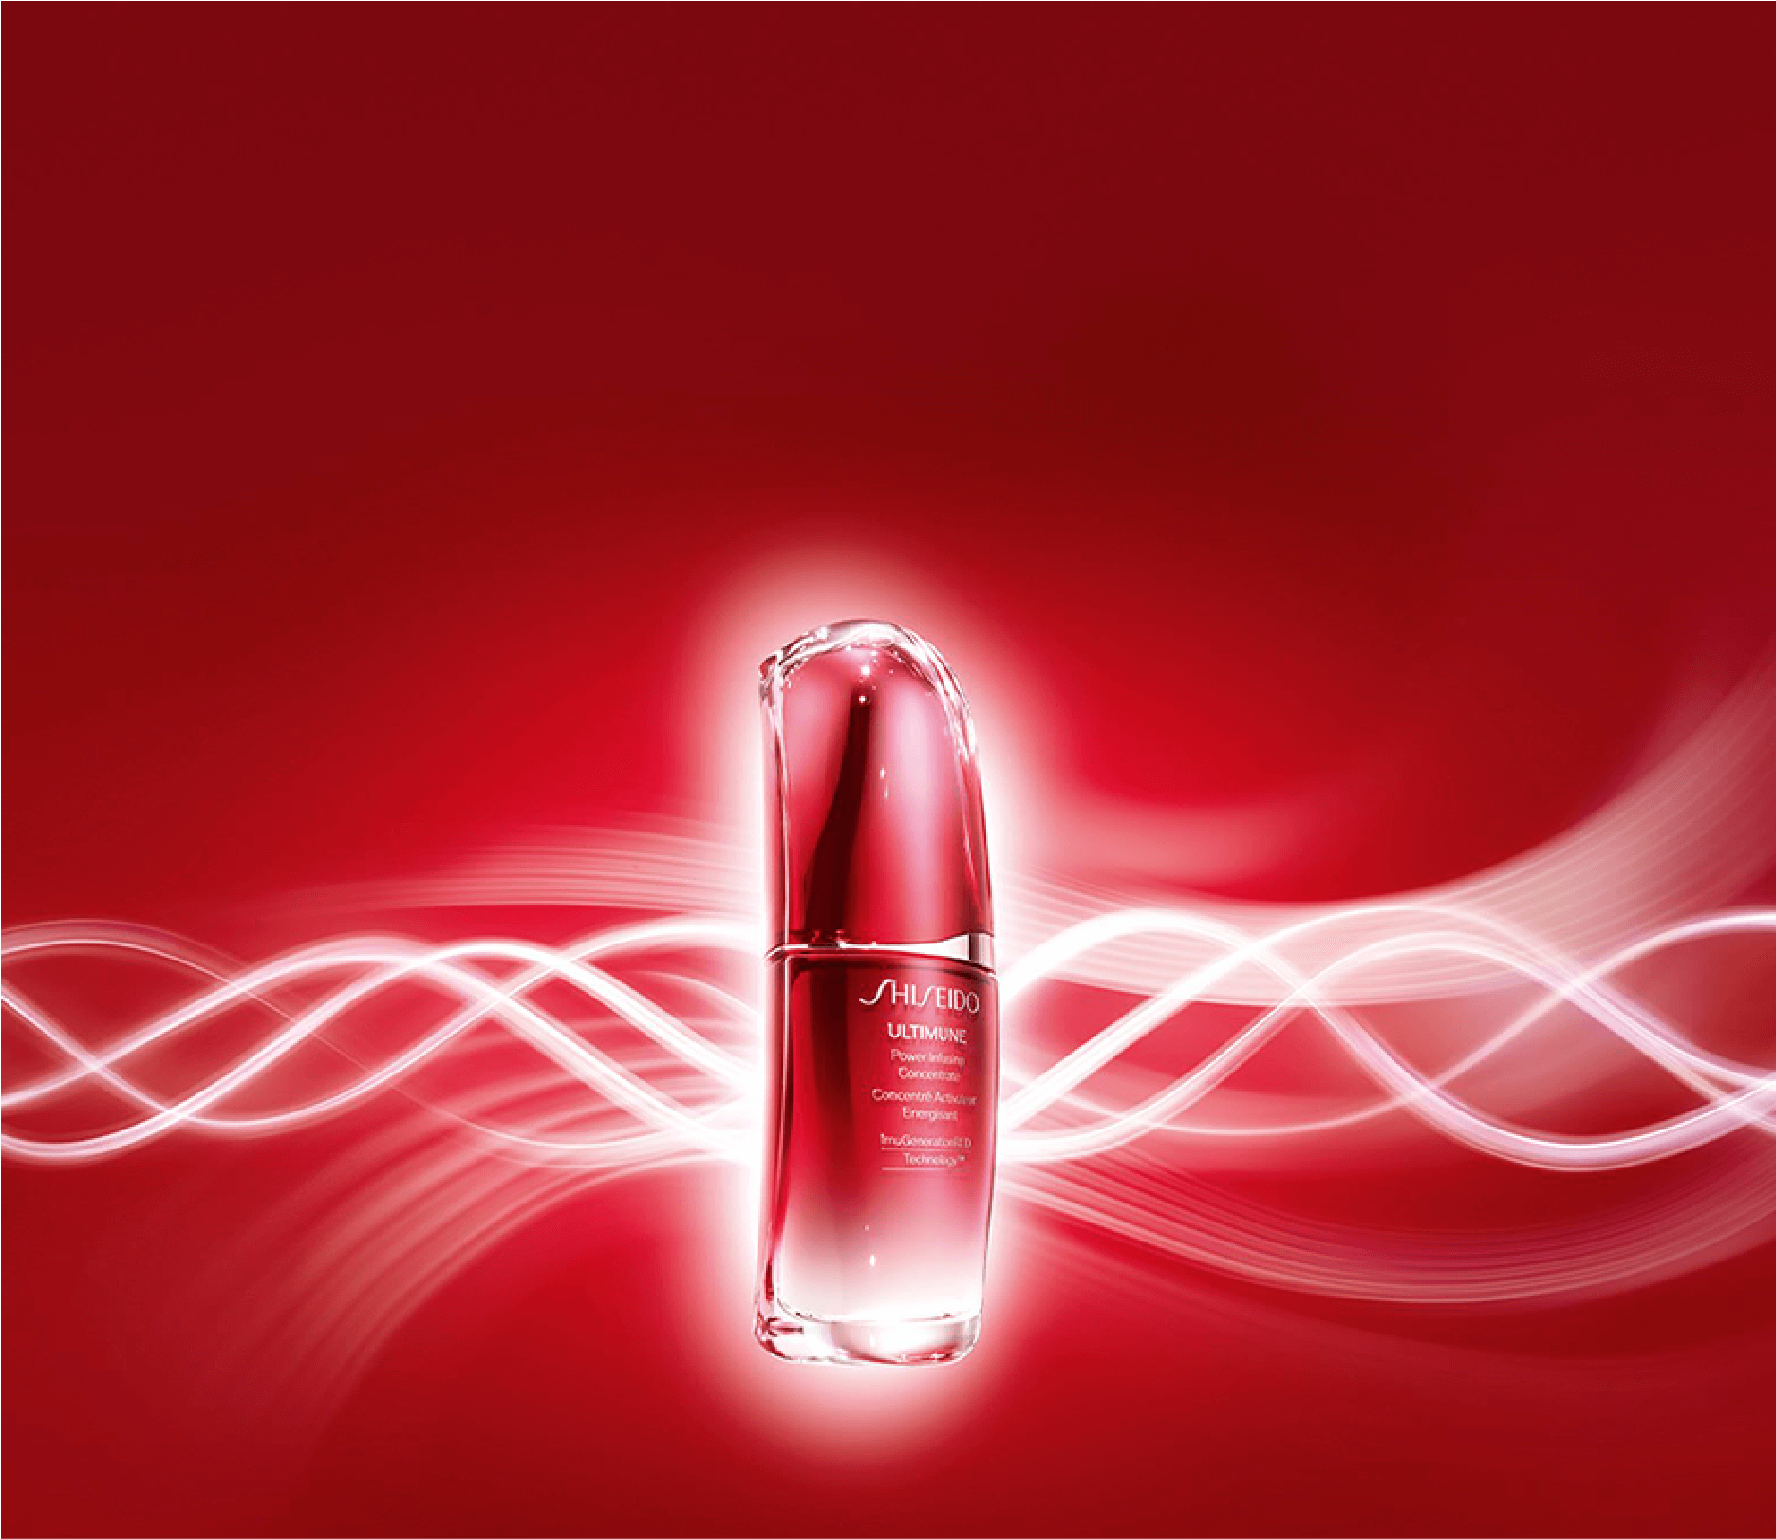 Shiseido Optimizing and Spreading the Essence of Beauty